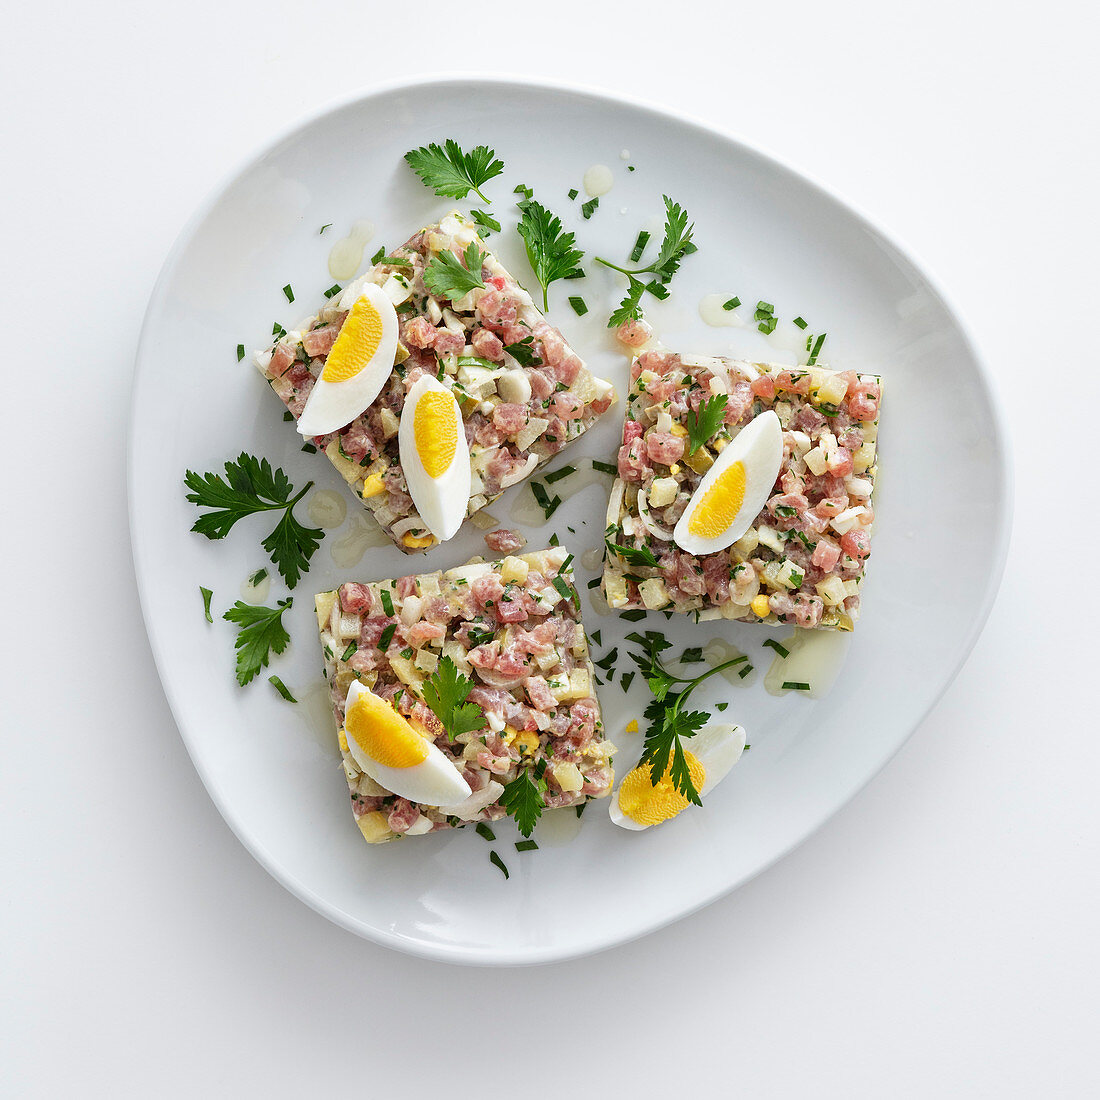 Tuna tartare with potatoes and egg